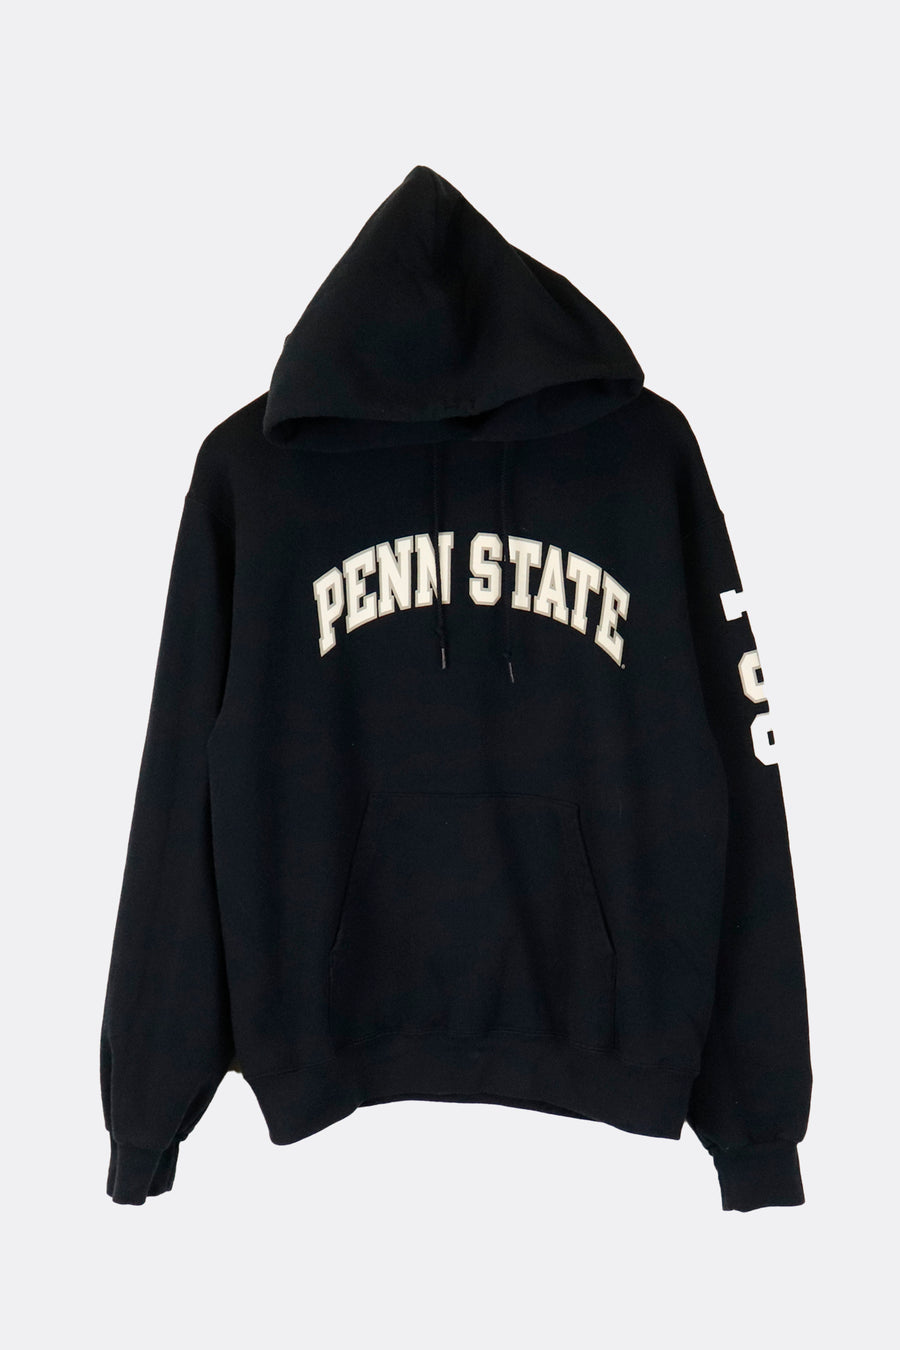 Vintage Champion Penn State PSU Vinyl Hooded Sweatshirt Sz M